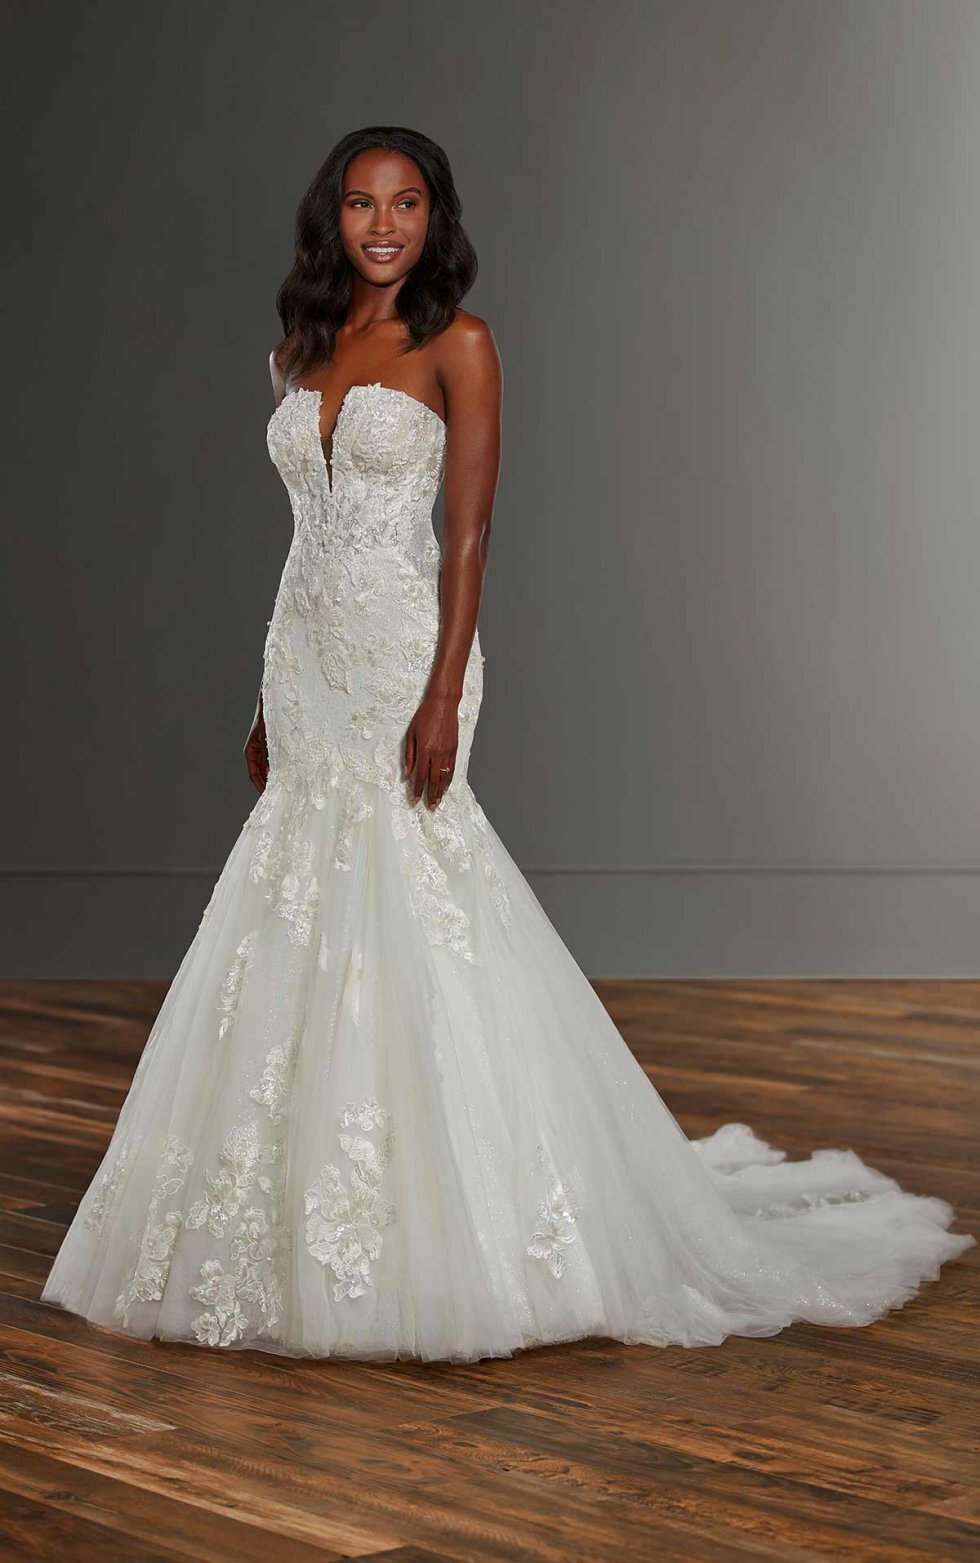 New ivory lace wedding dress size 12, Jewel by David's bridal, A line